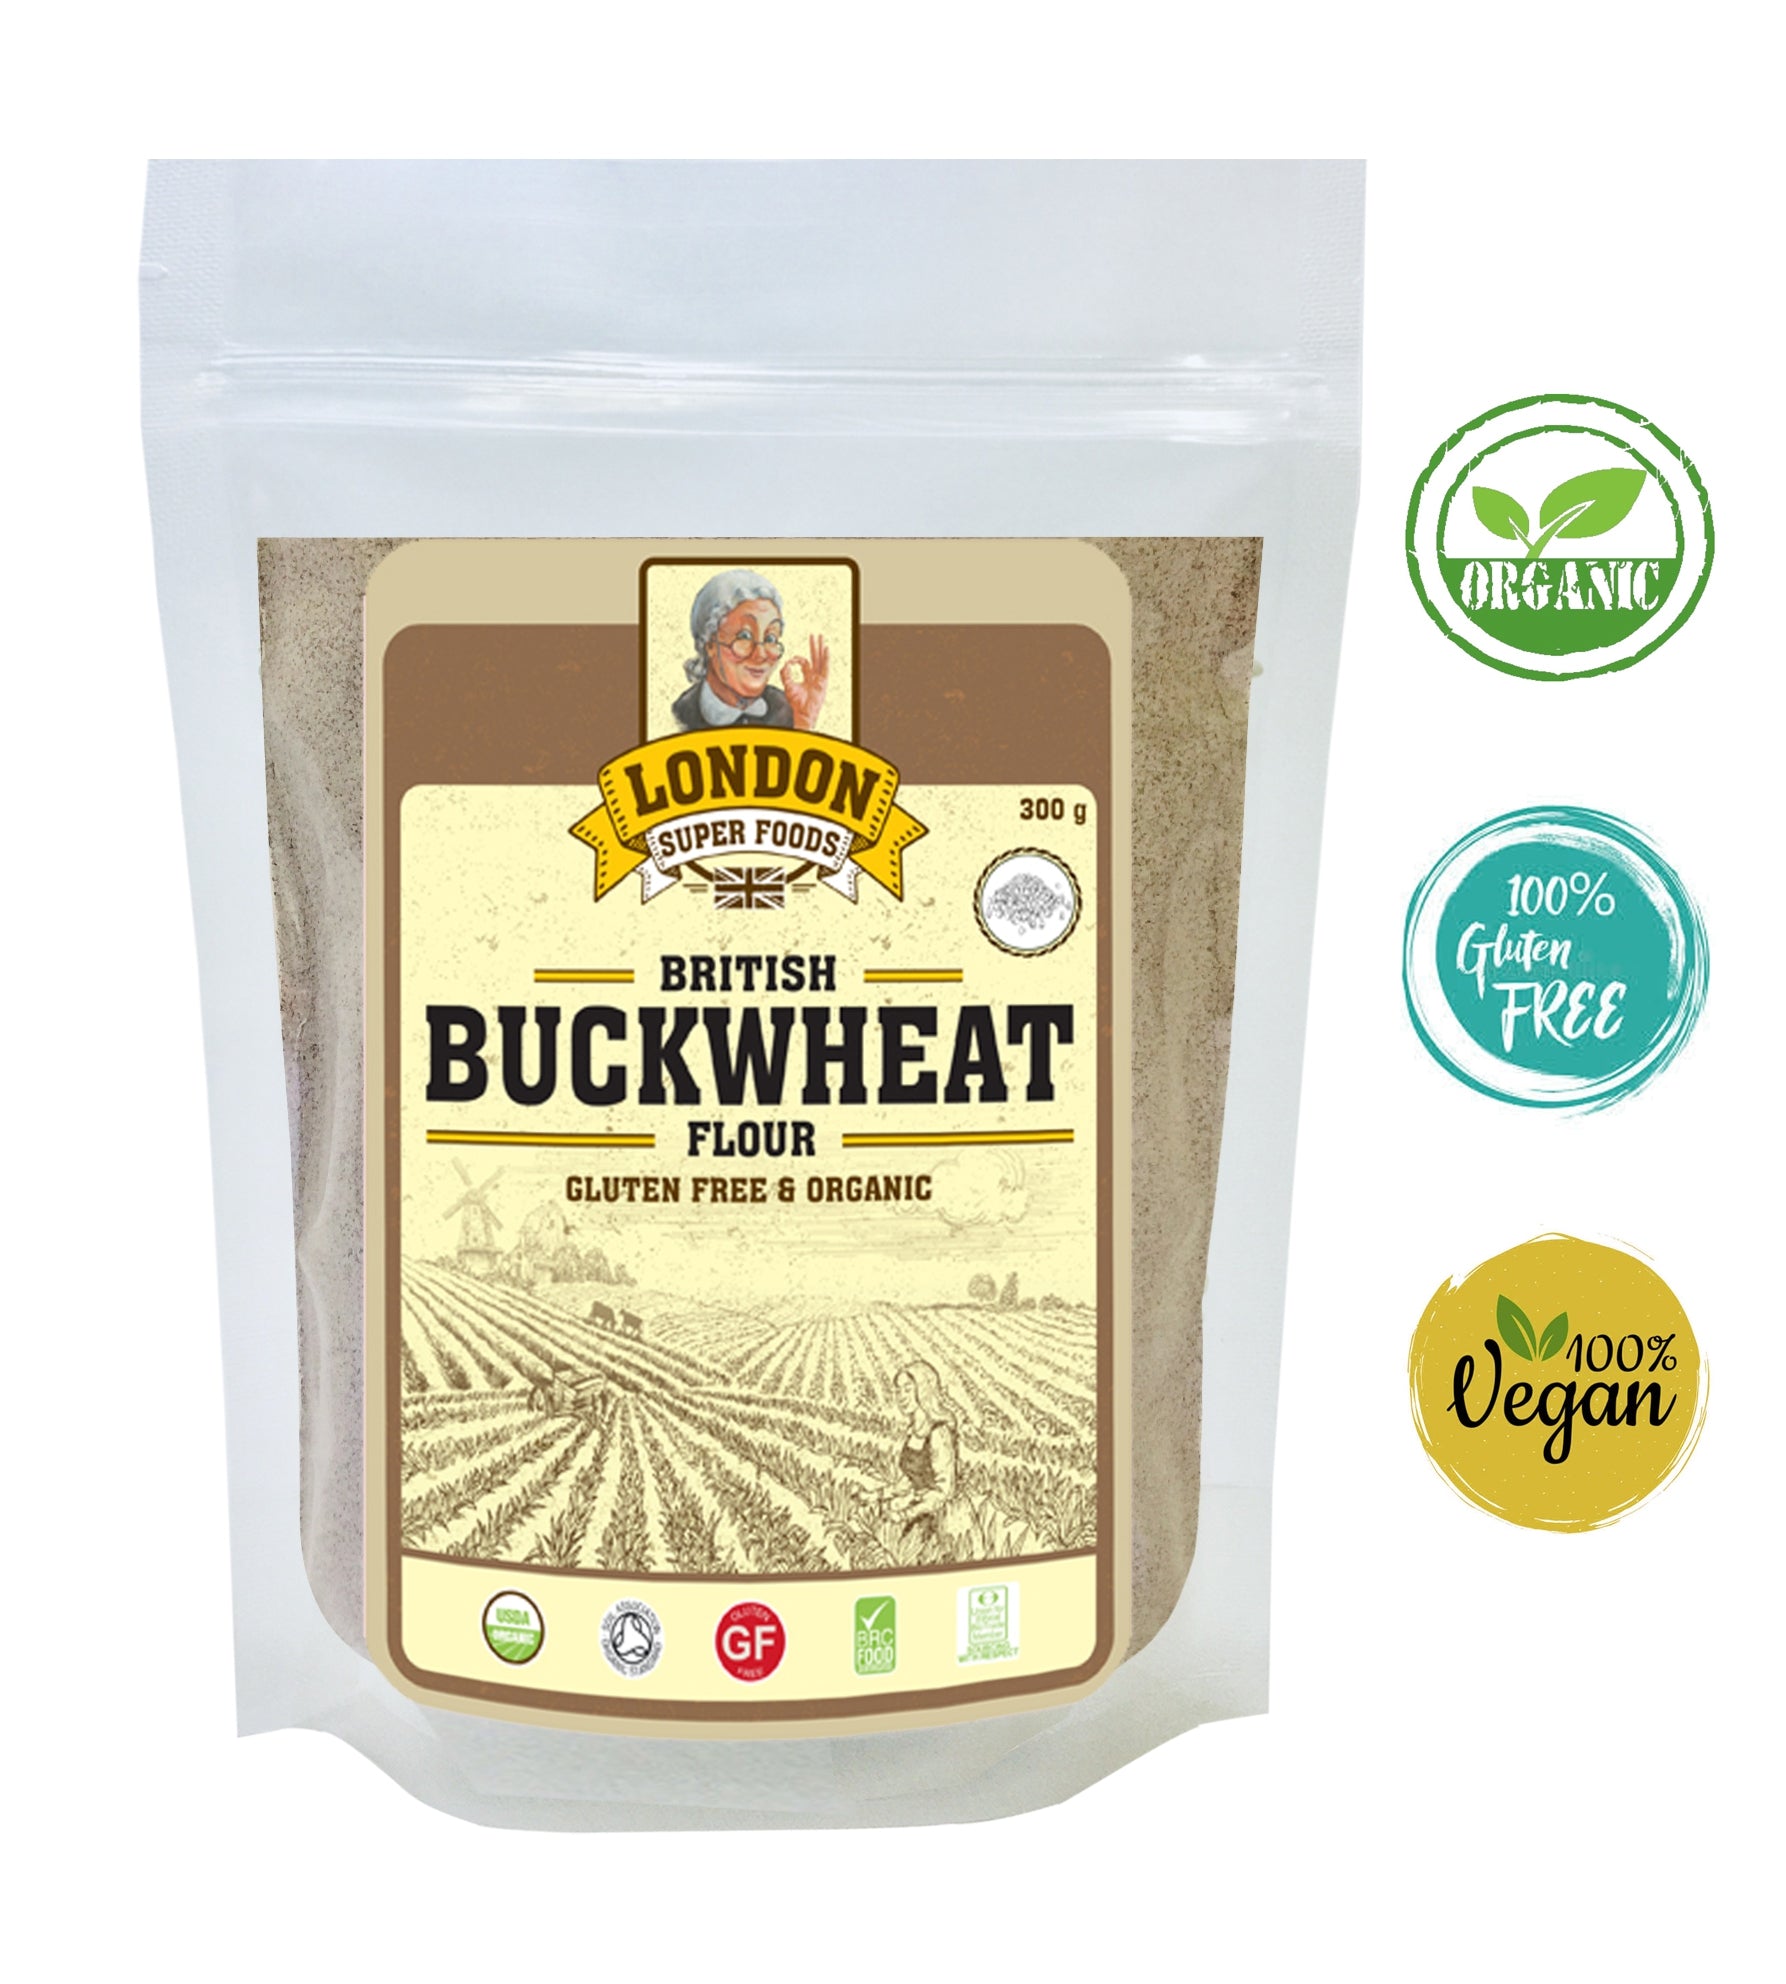 LONDON SUPER FOODS Organic British Buckwheat Flour, 300g